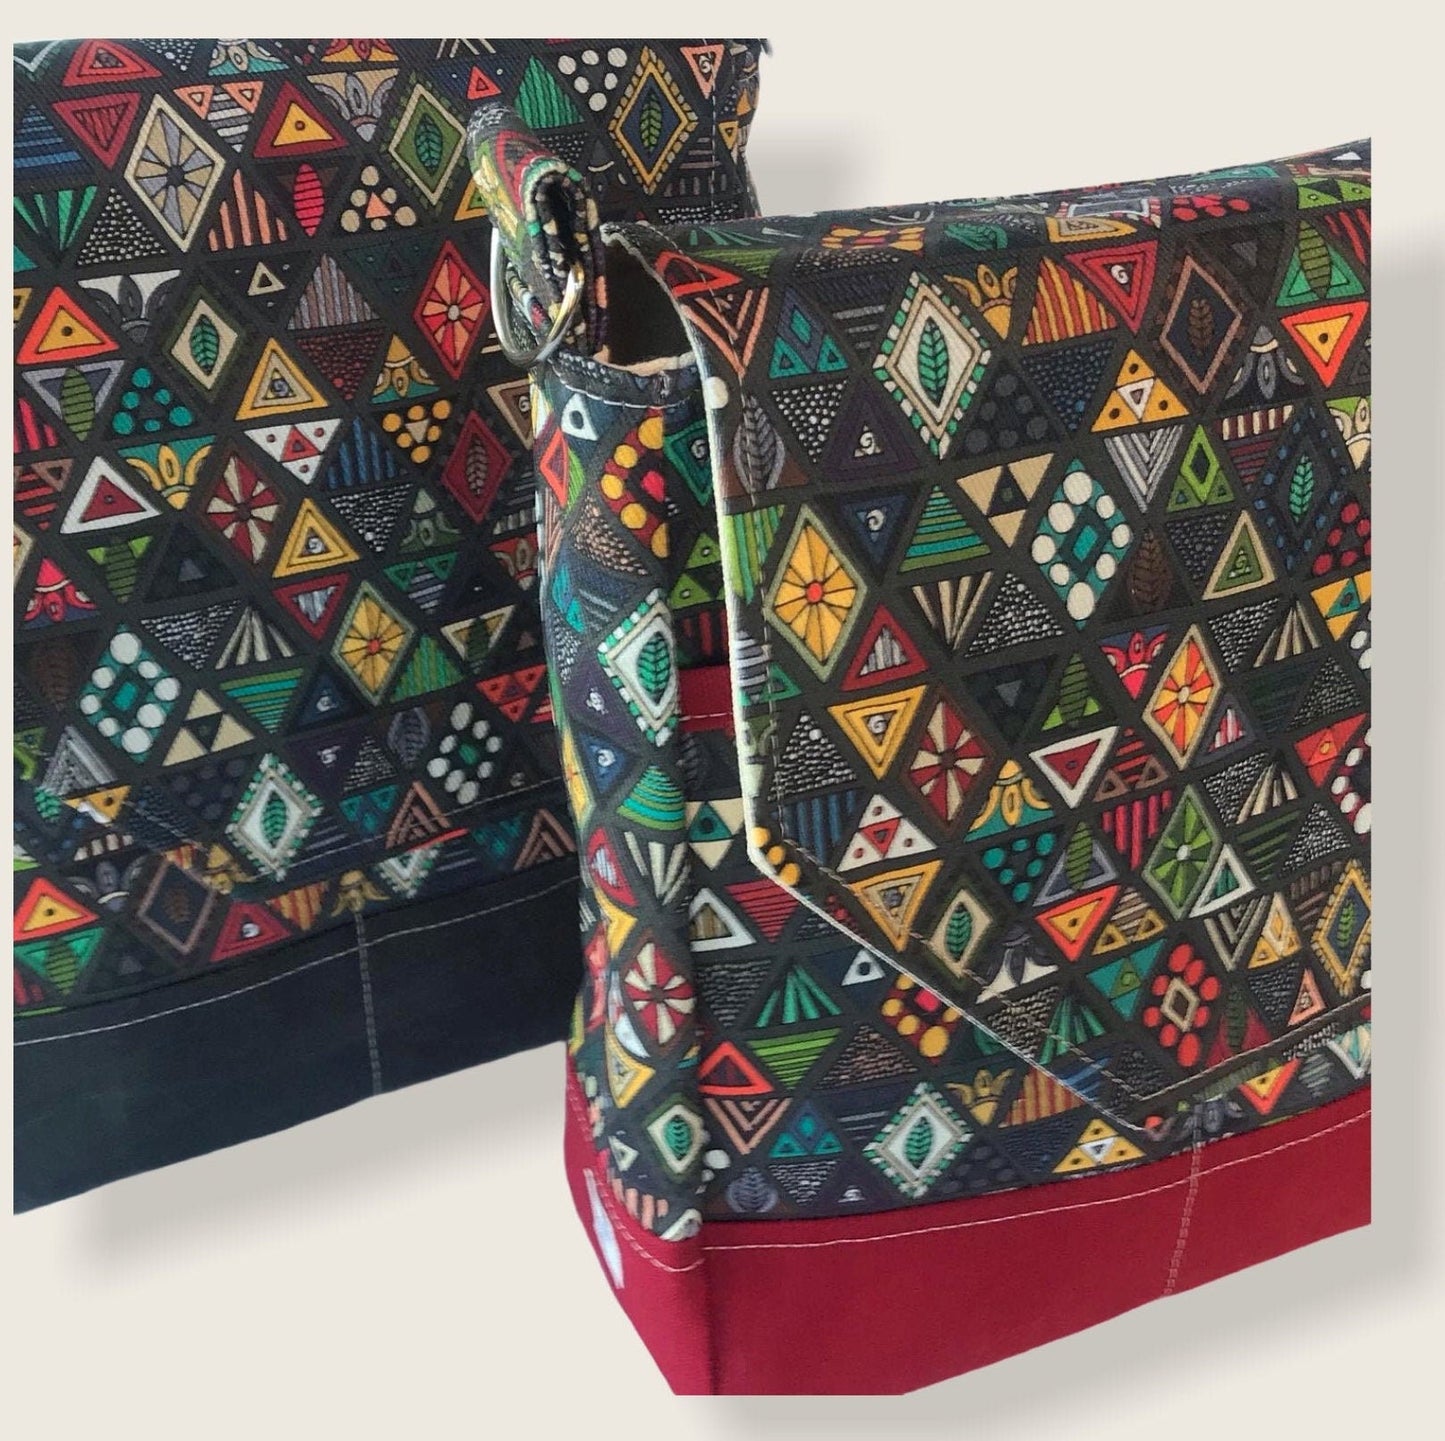 Geometric print purse, moorish style bag, mudcloth style bag, geometric art purse.